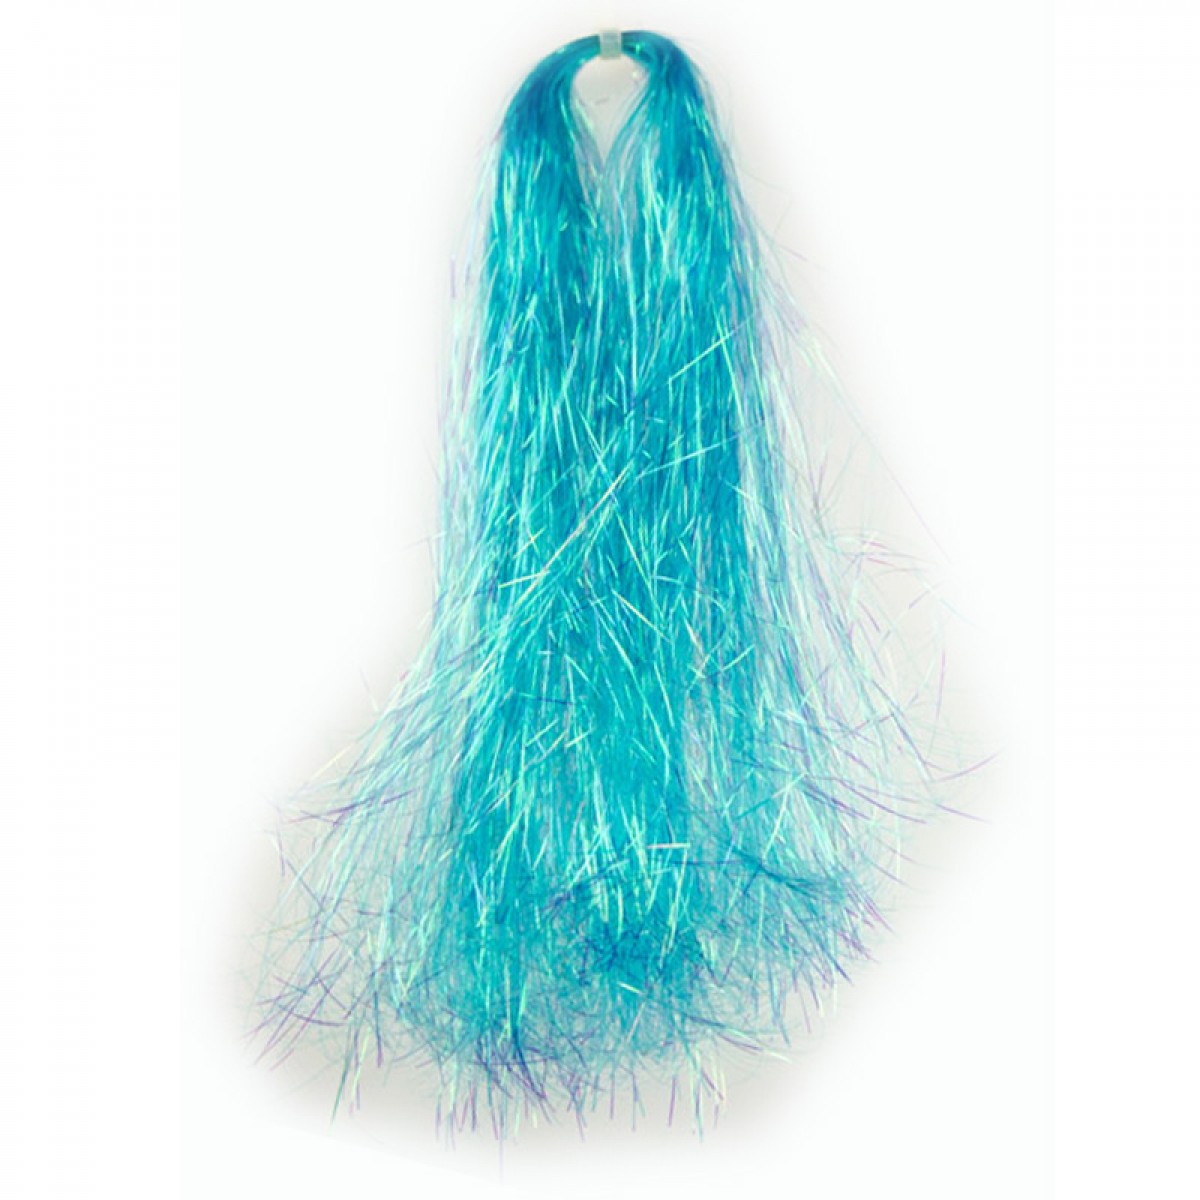 Spectraflash Hair (irise)